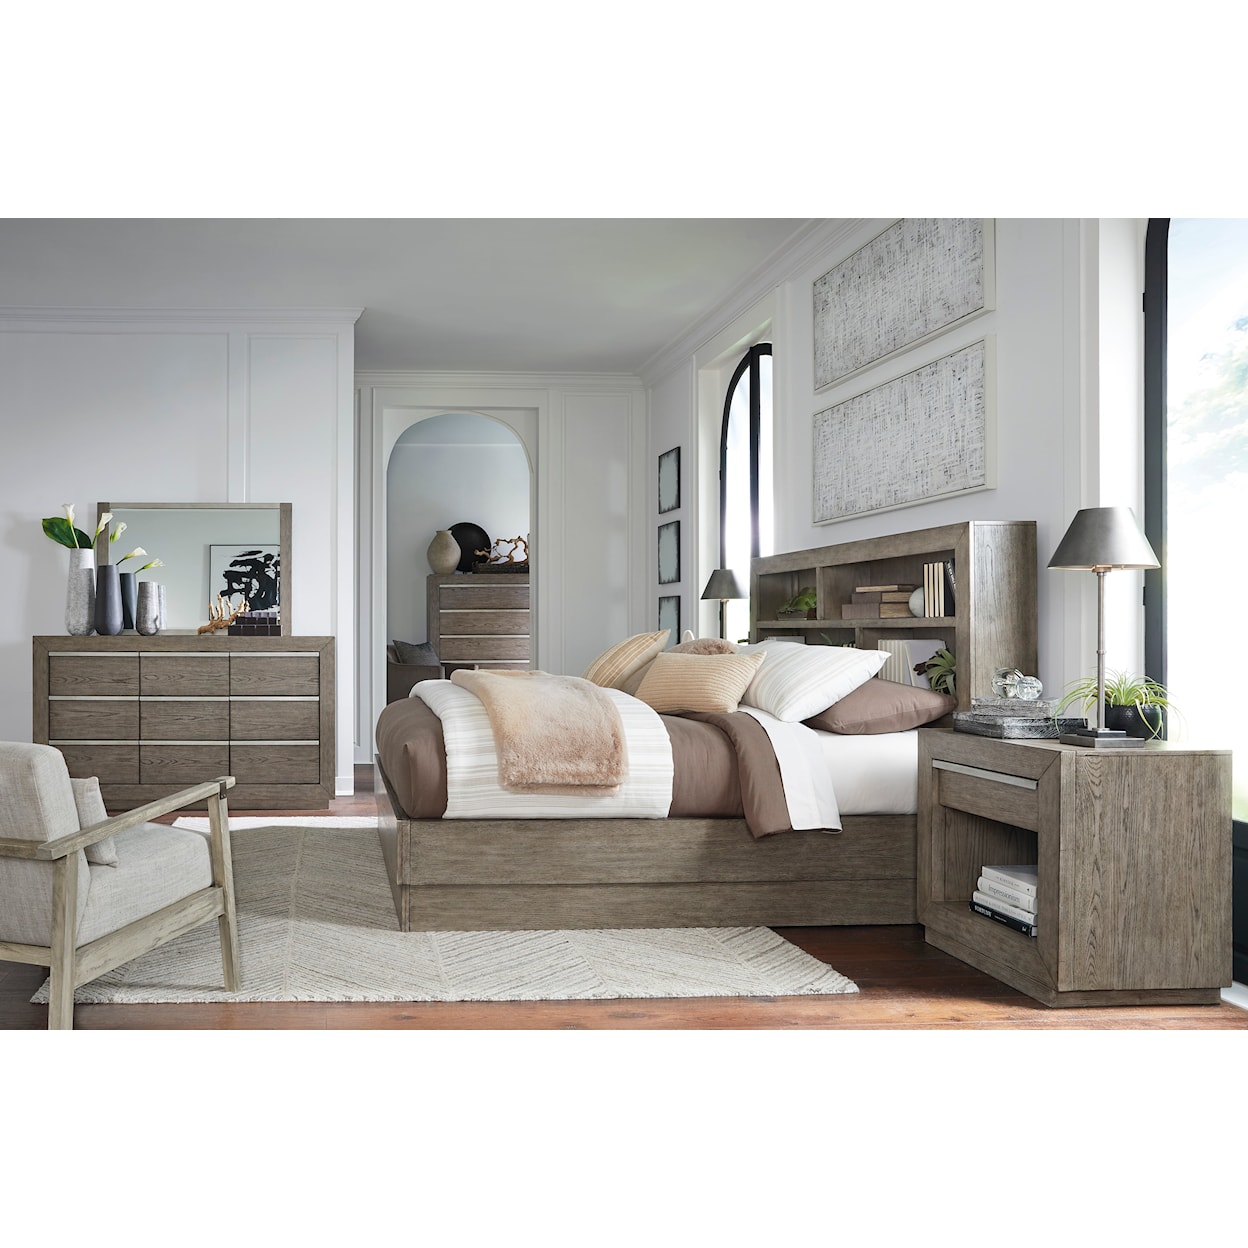 Ashley Furniture Benchcraft Anibecca California King Bedroom Set